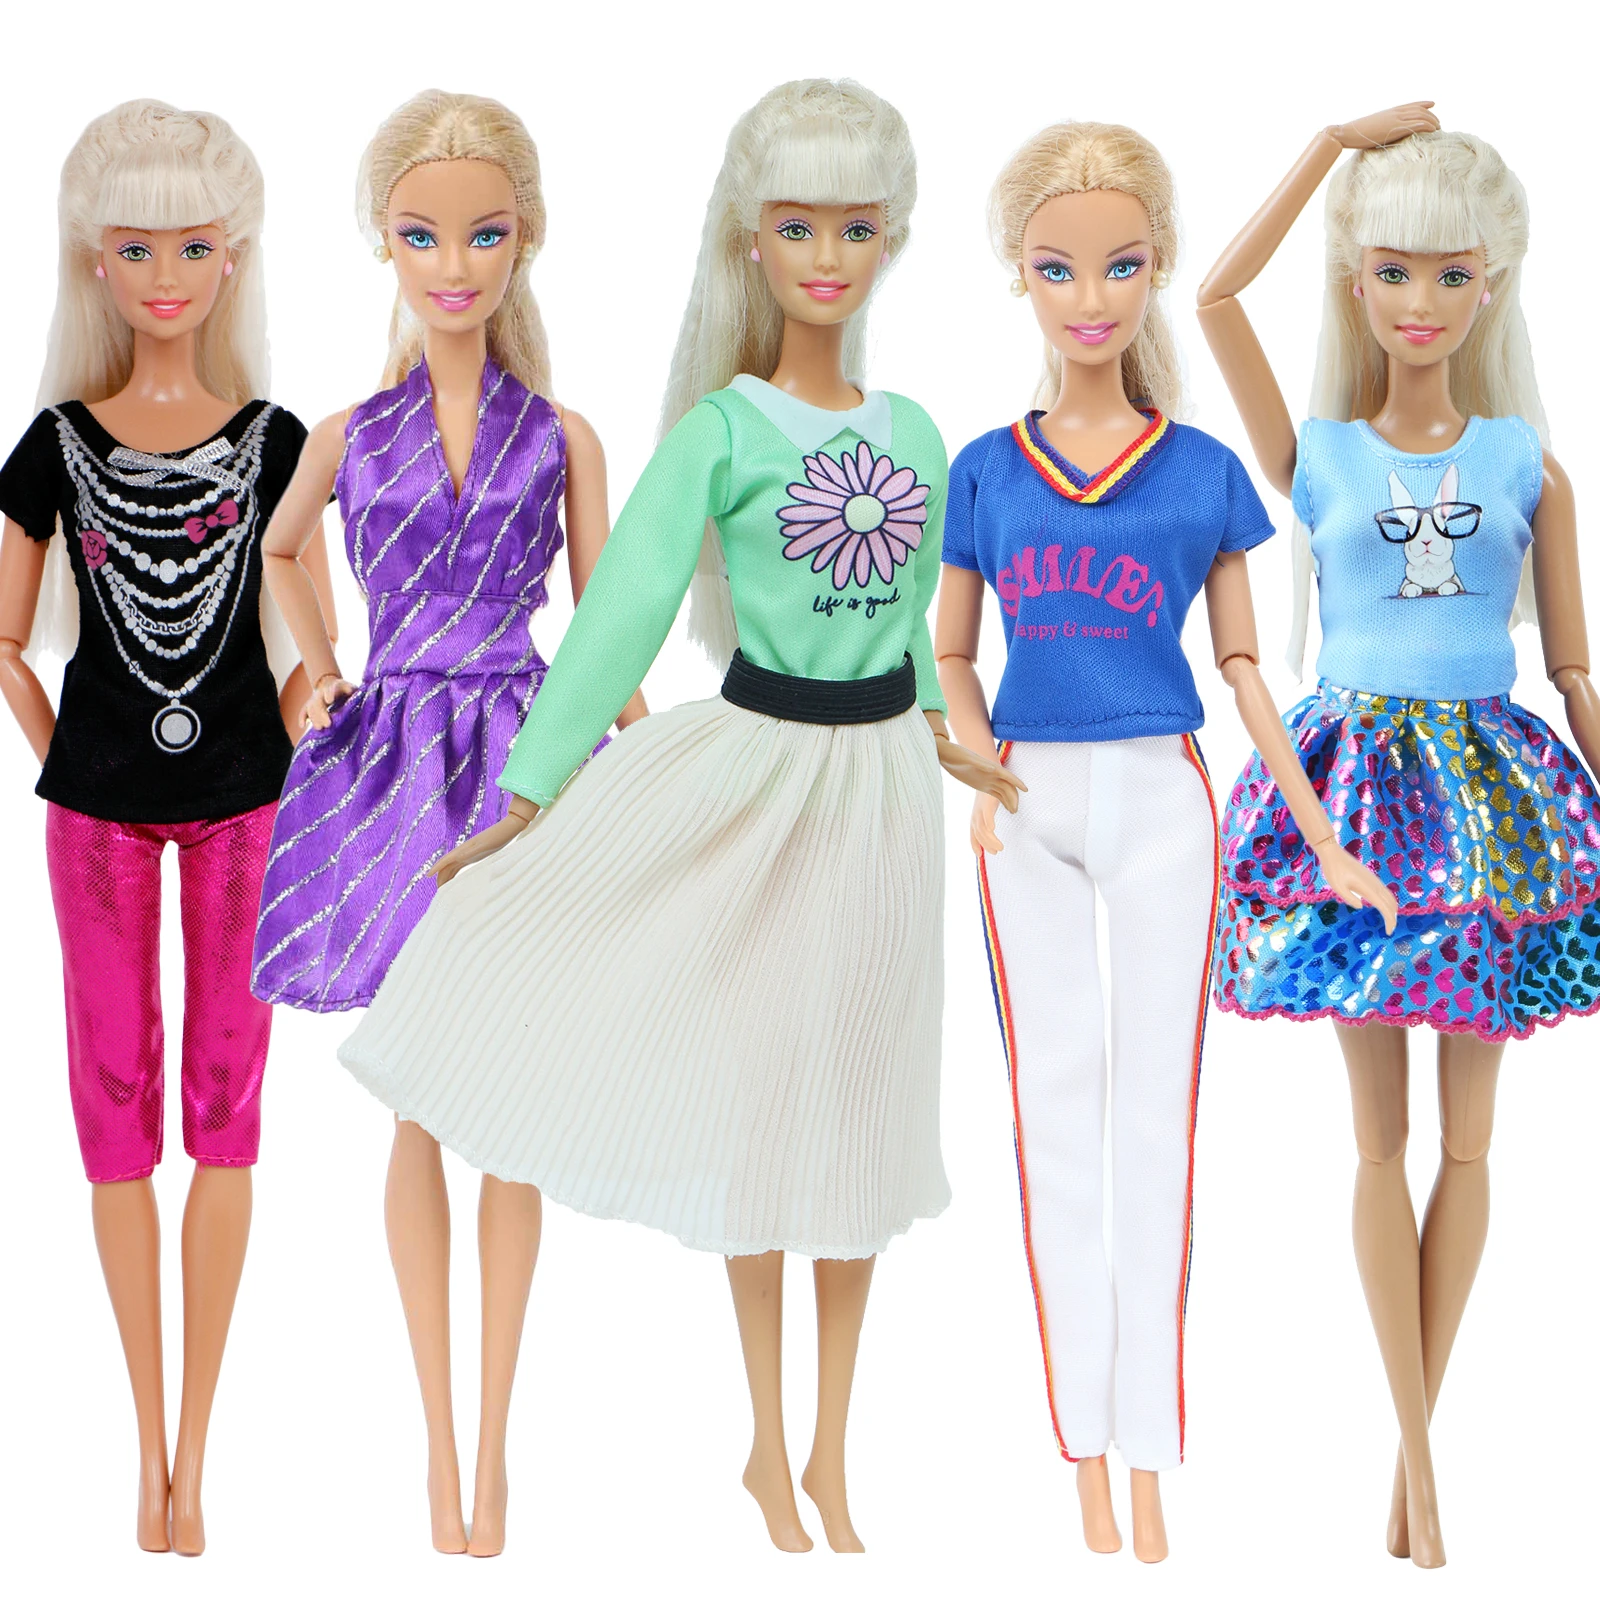 5 Adet Grup Yuksek Kaliteli Bebek Elbise Barbie Bebek Pembe Seksi Parti Kalma Giyim Dantel Kisa Elbisesi Etek Elbise Oyuncak Aksesuarlari Bebek Aksesuarlari Aliexpress